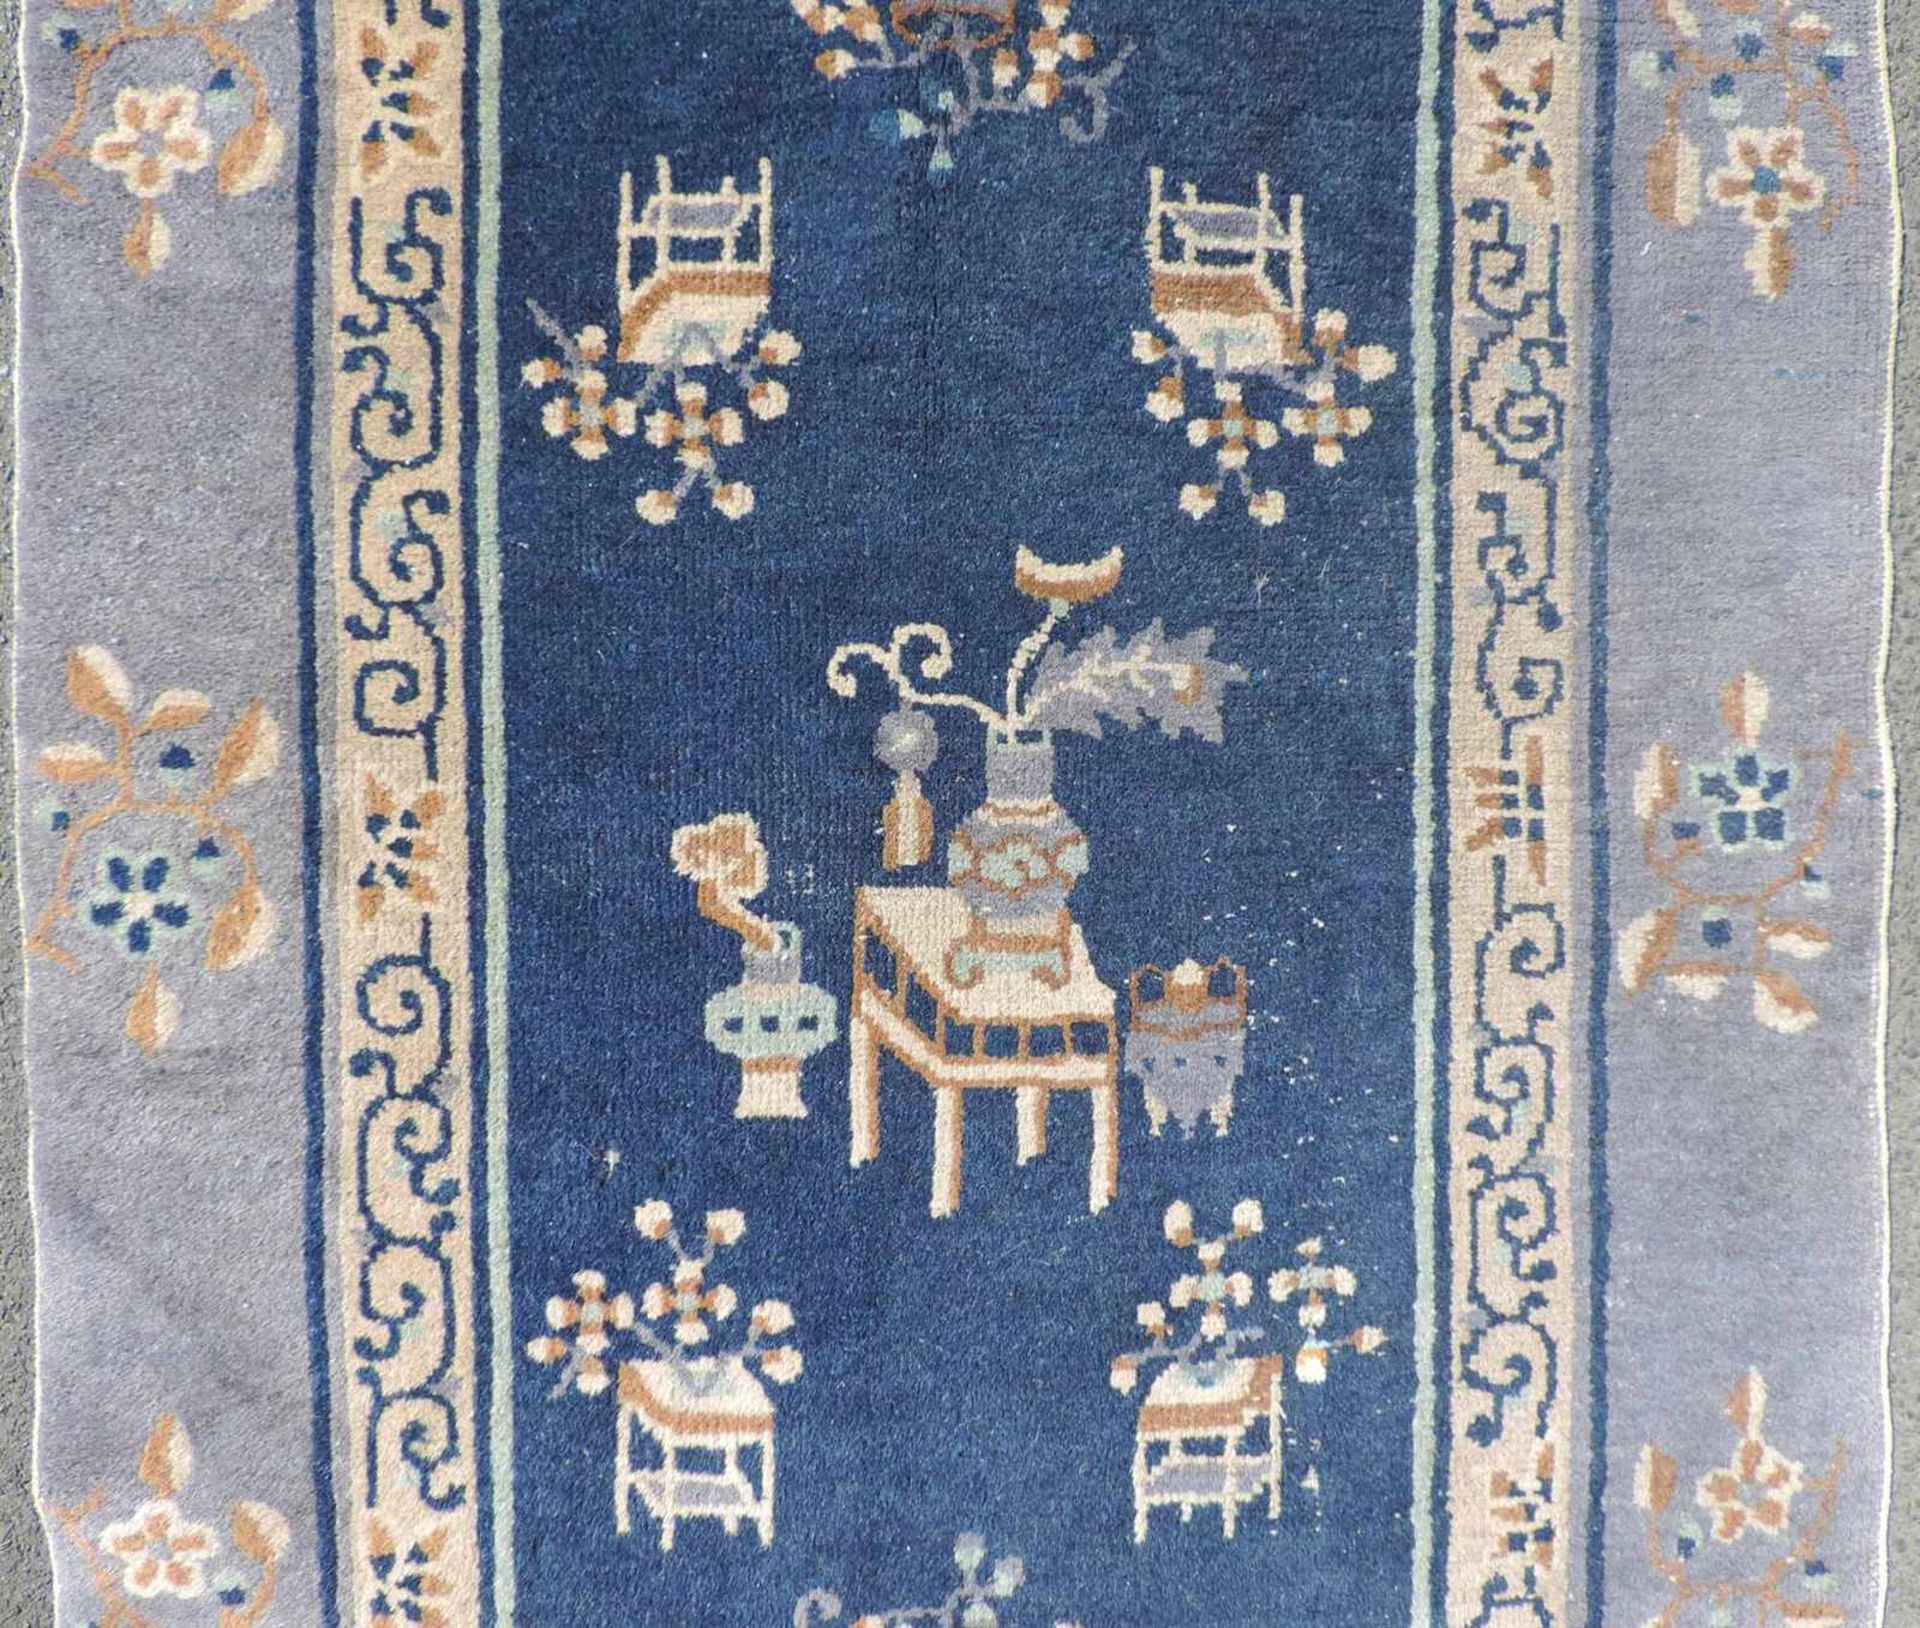 Pau Tou Teppich China, antik, Ende 19. Jahrhundert. 180 cm x 93 cm. Handgeknüpft. Wolle auf - Bild 3 aus 7